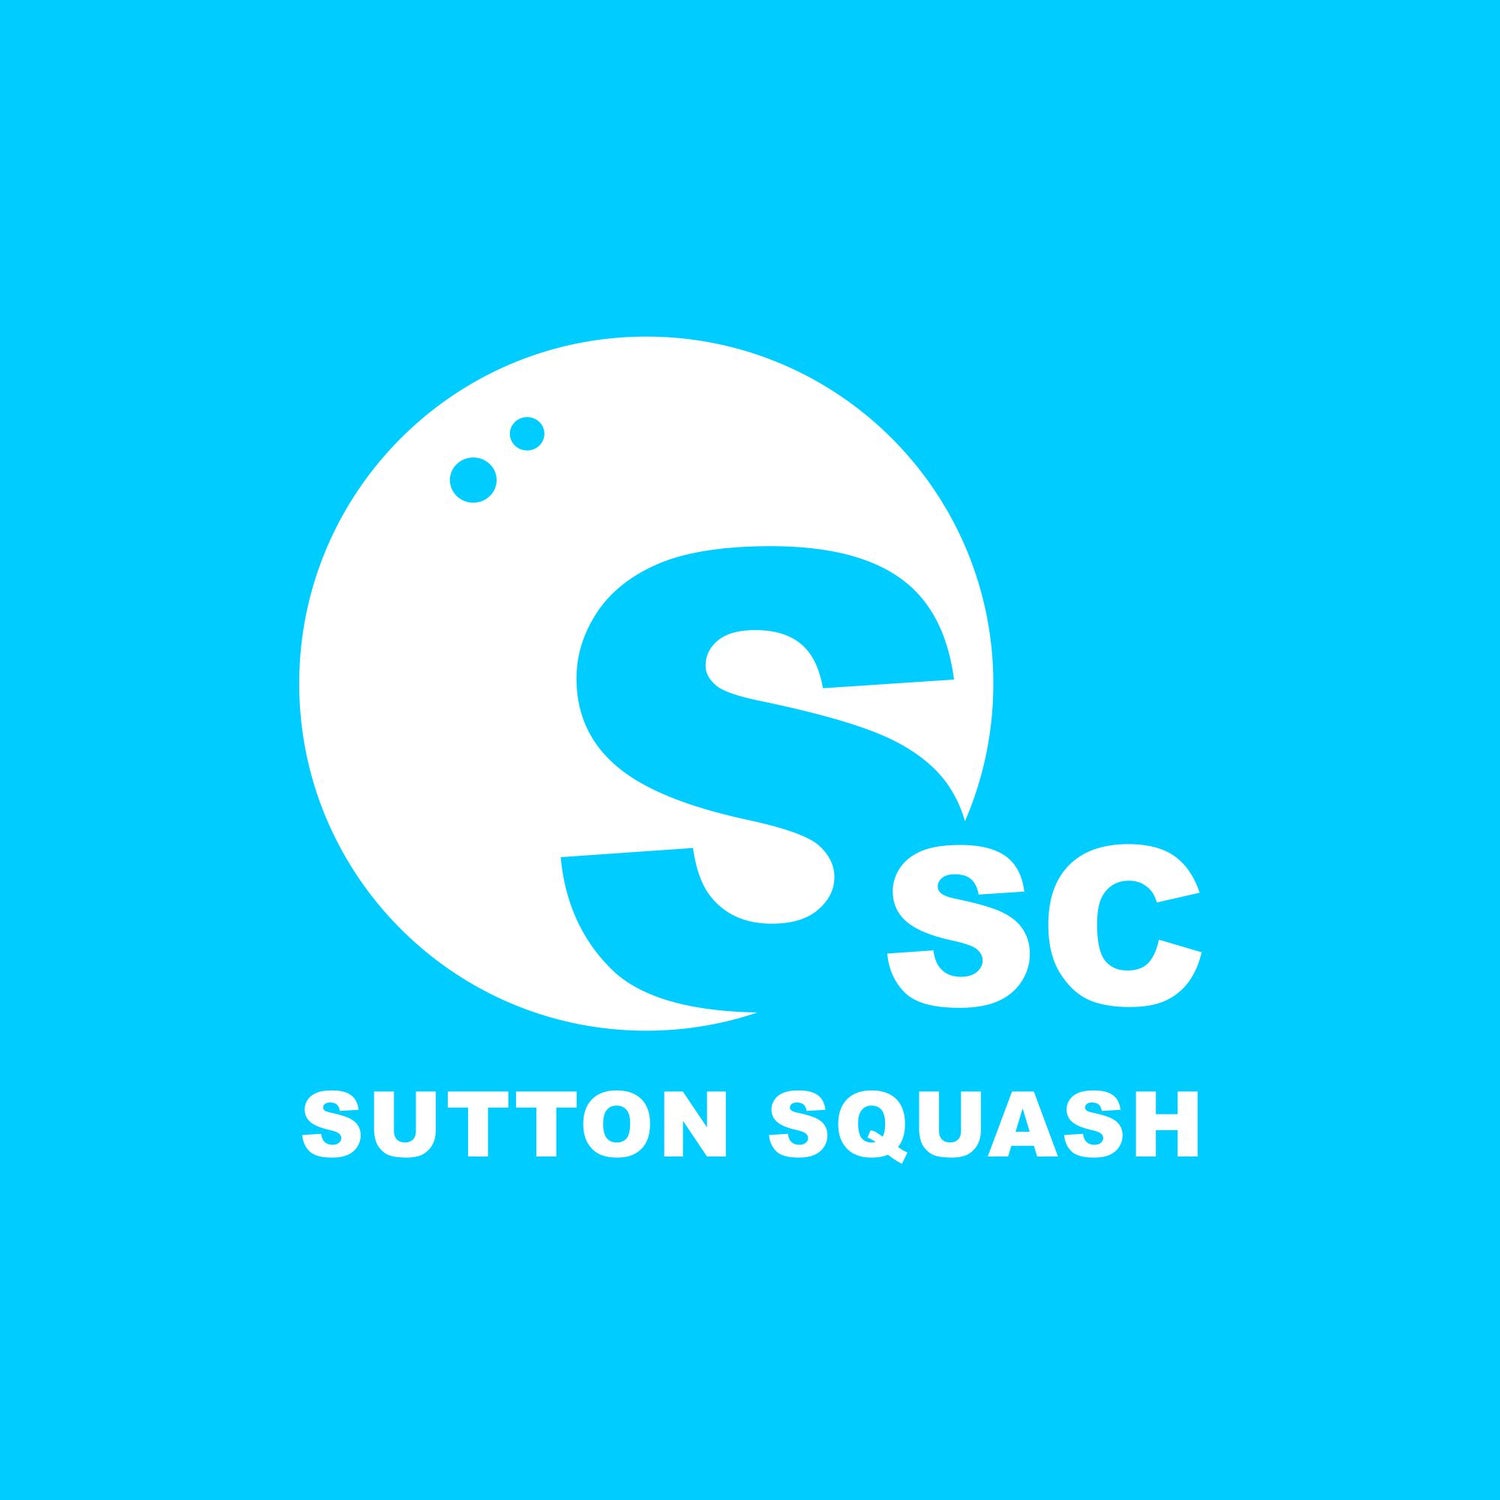 Sutton Squash